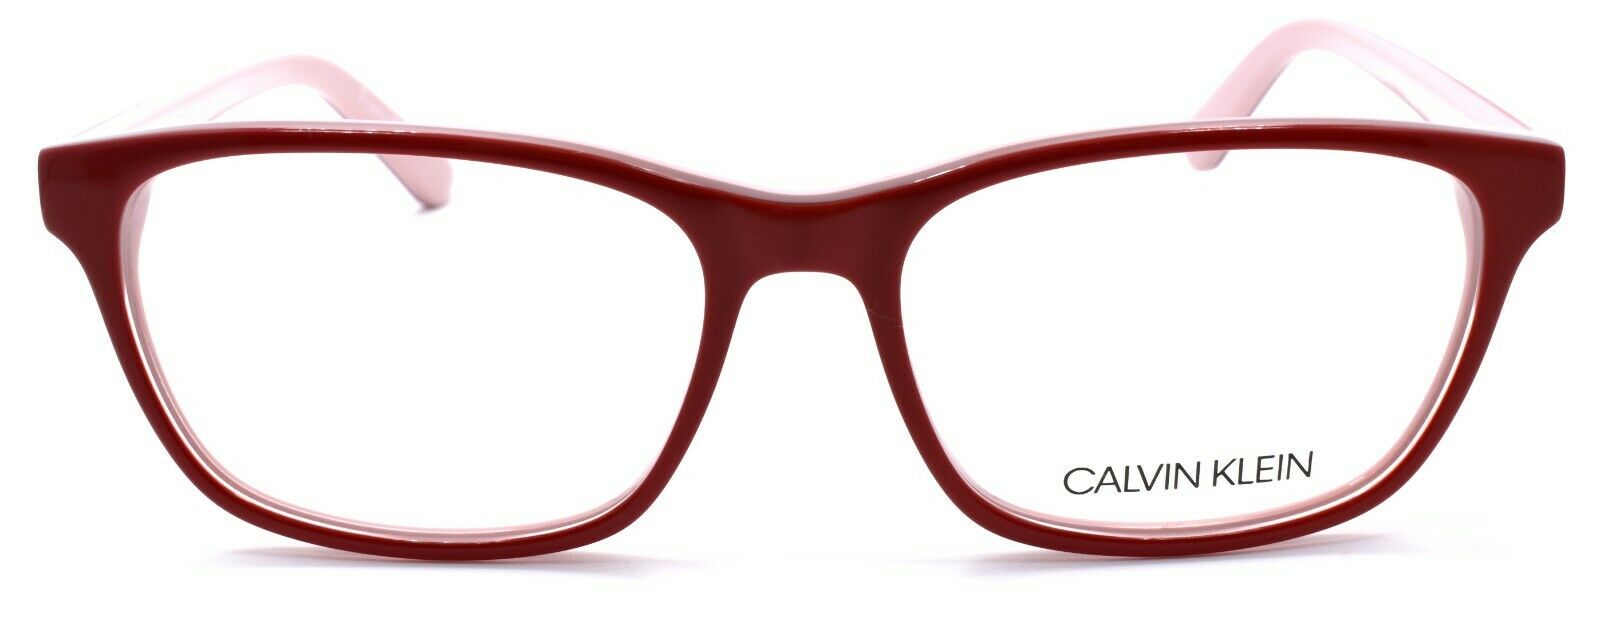 2-Calvin Klein CK18515 610 Women's Eyeglasses Frames 51-15-135 Red / Blush-883901100822-IKSpecs